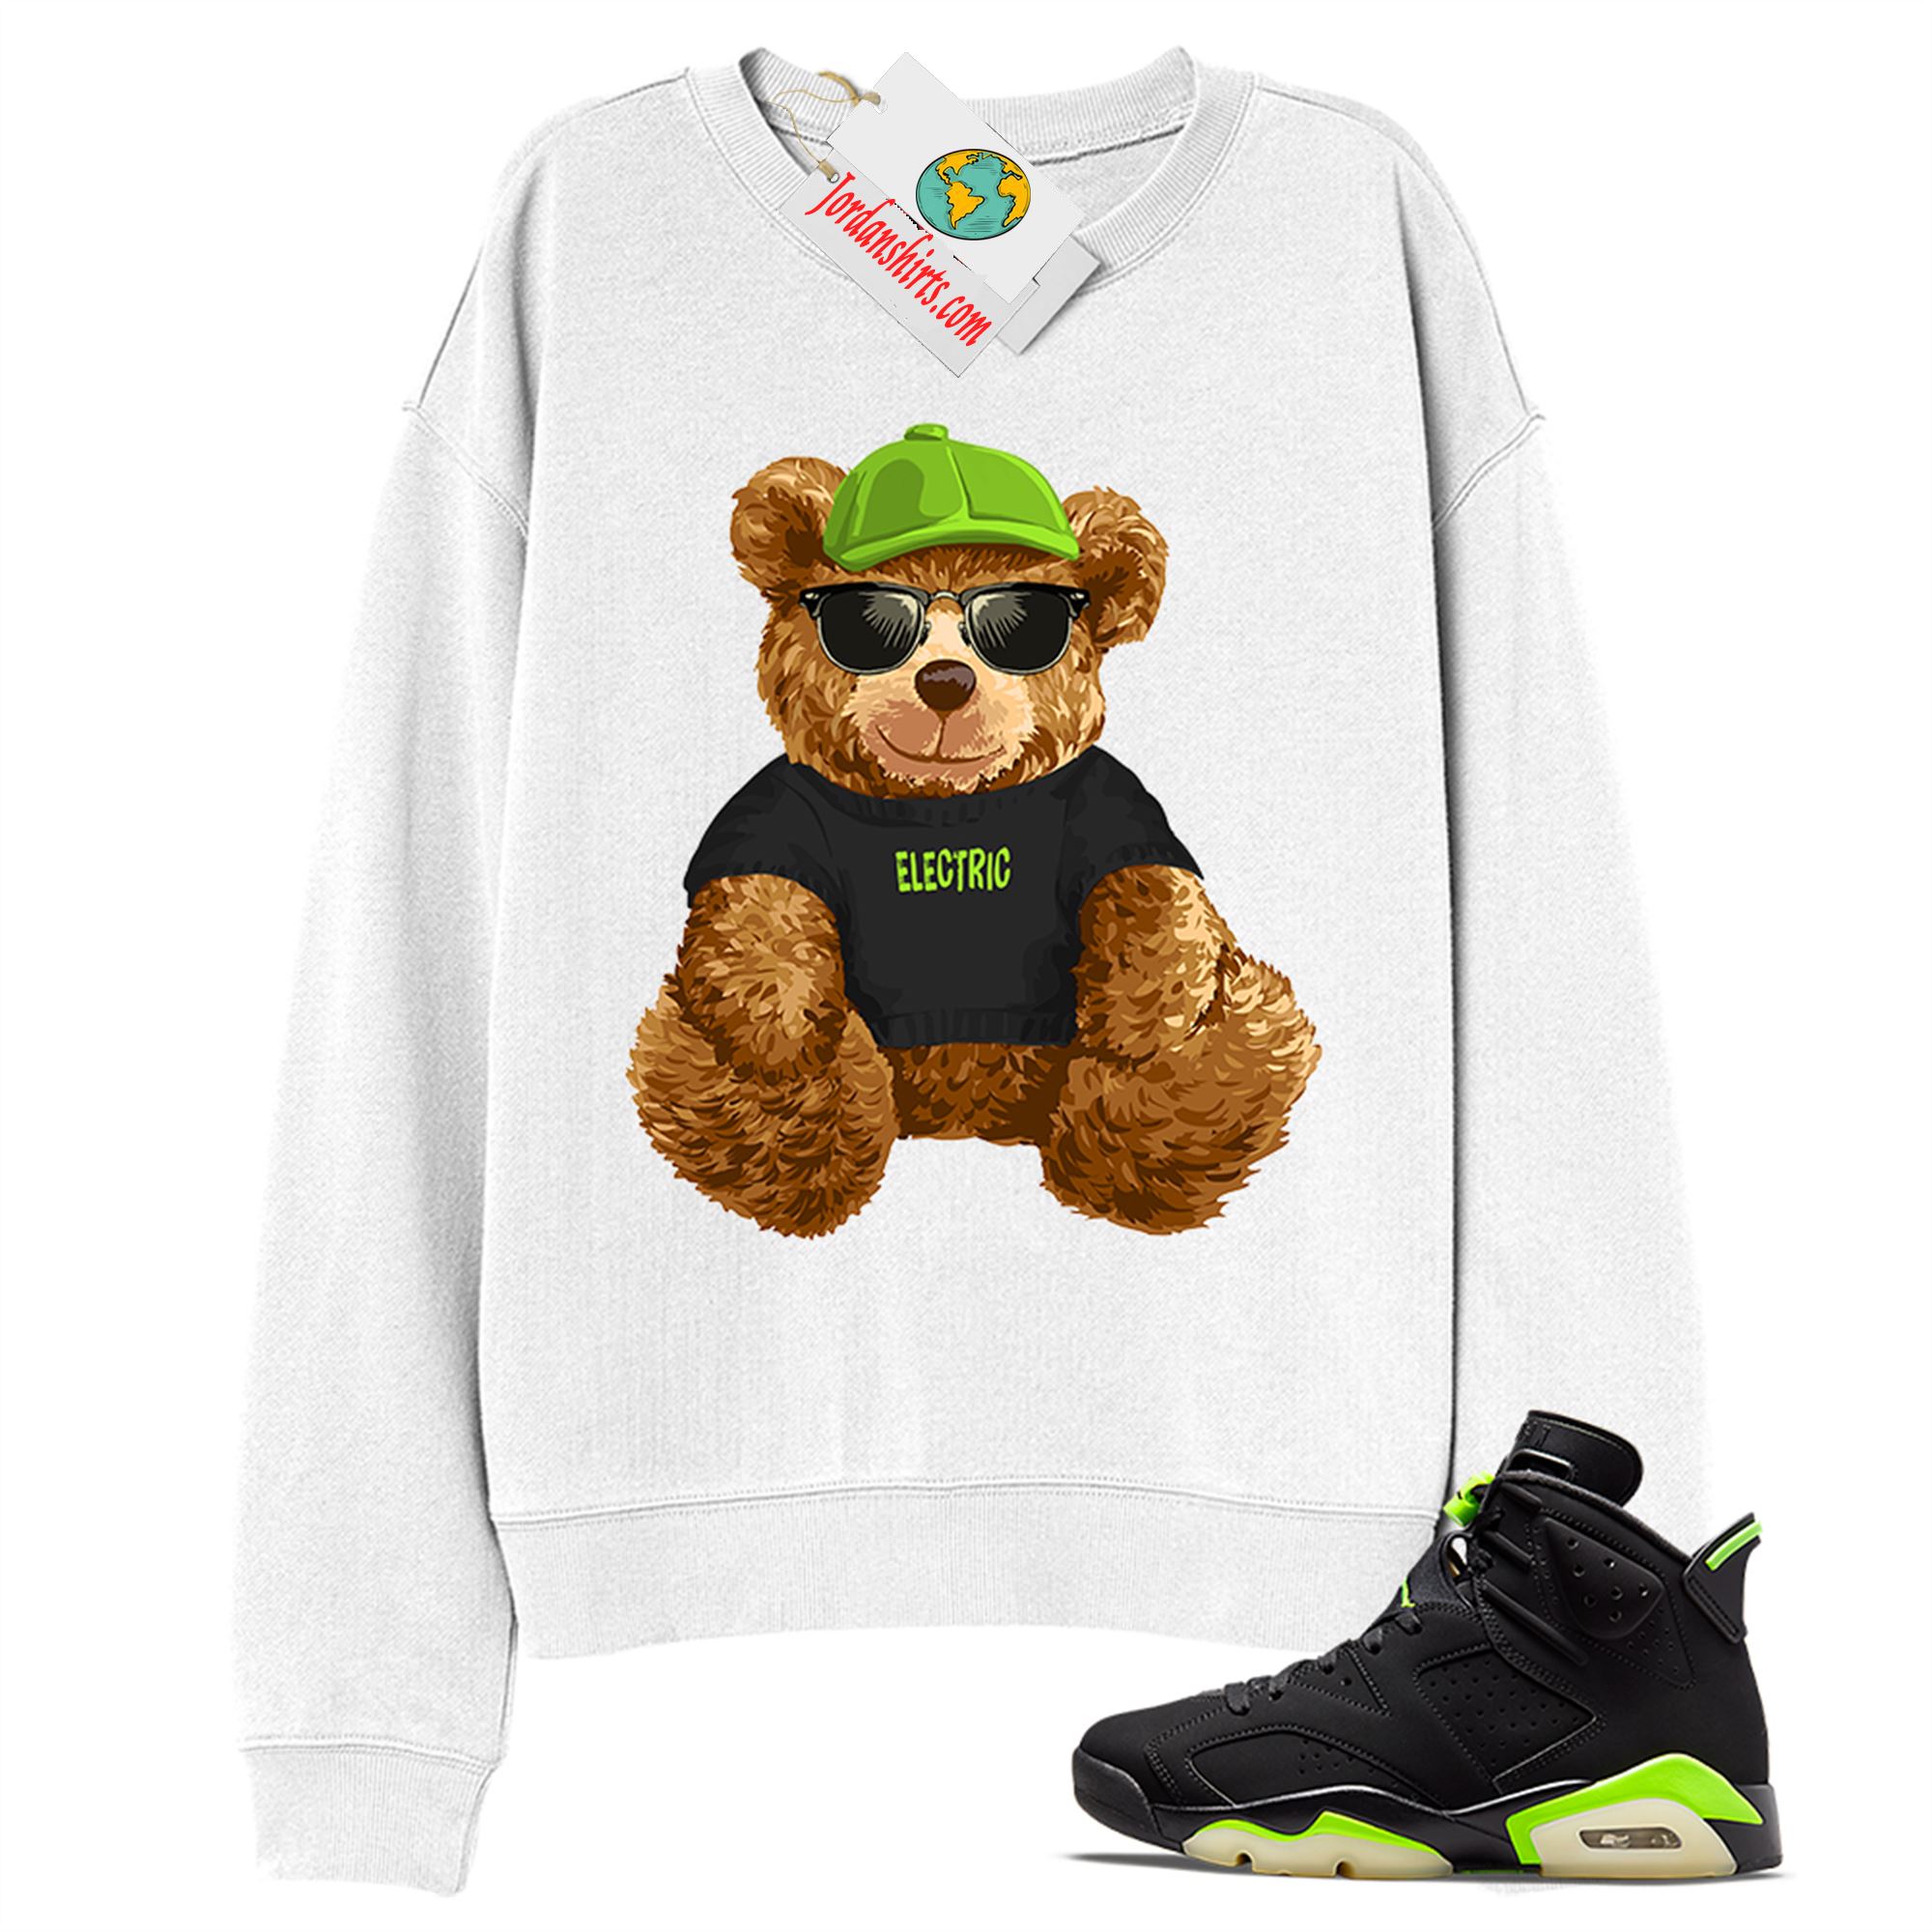 Jordan 6 Sweatshirt, Teddy Bear With Sunglasses Hat White Sweatshirt Air Jordan 6 Electric Green 6s Full Size Up To 5xl